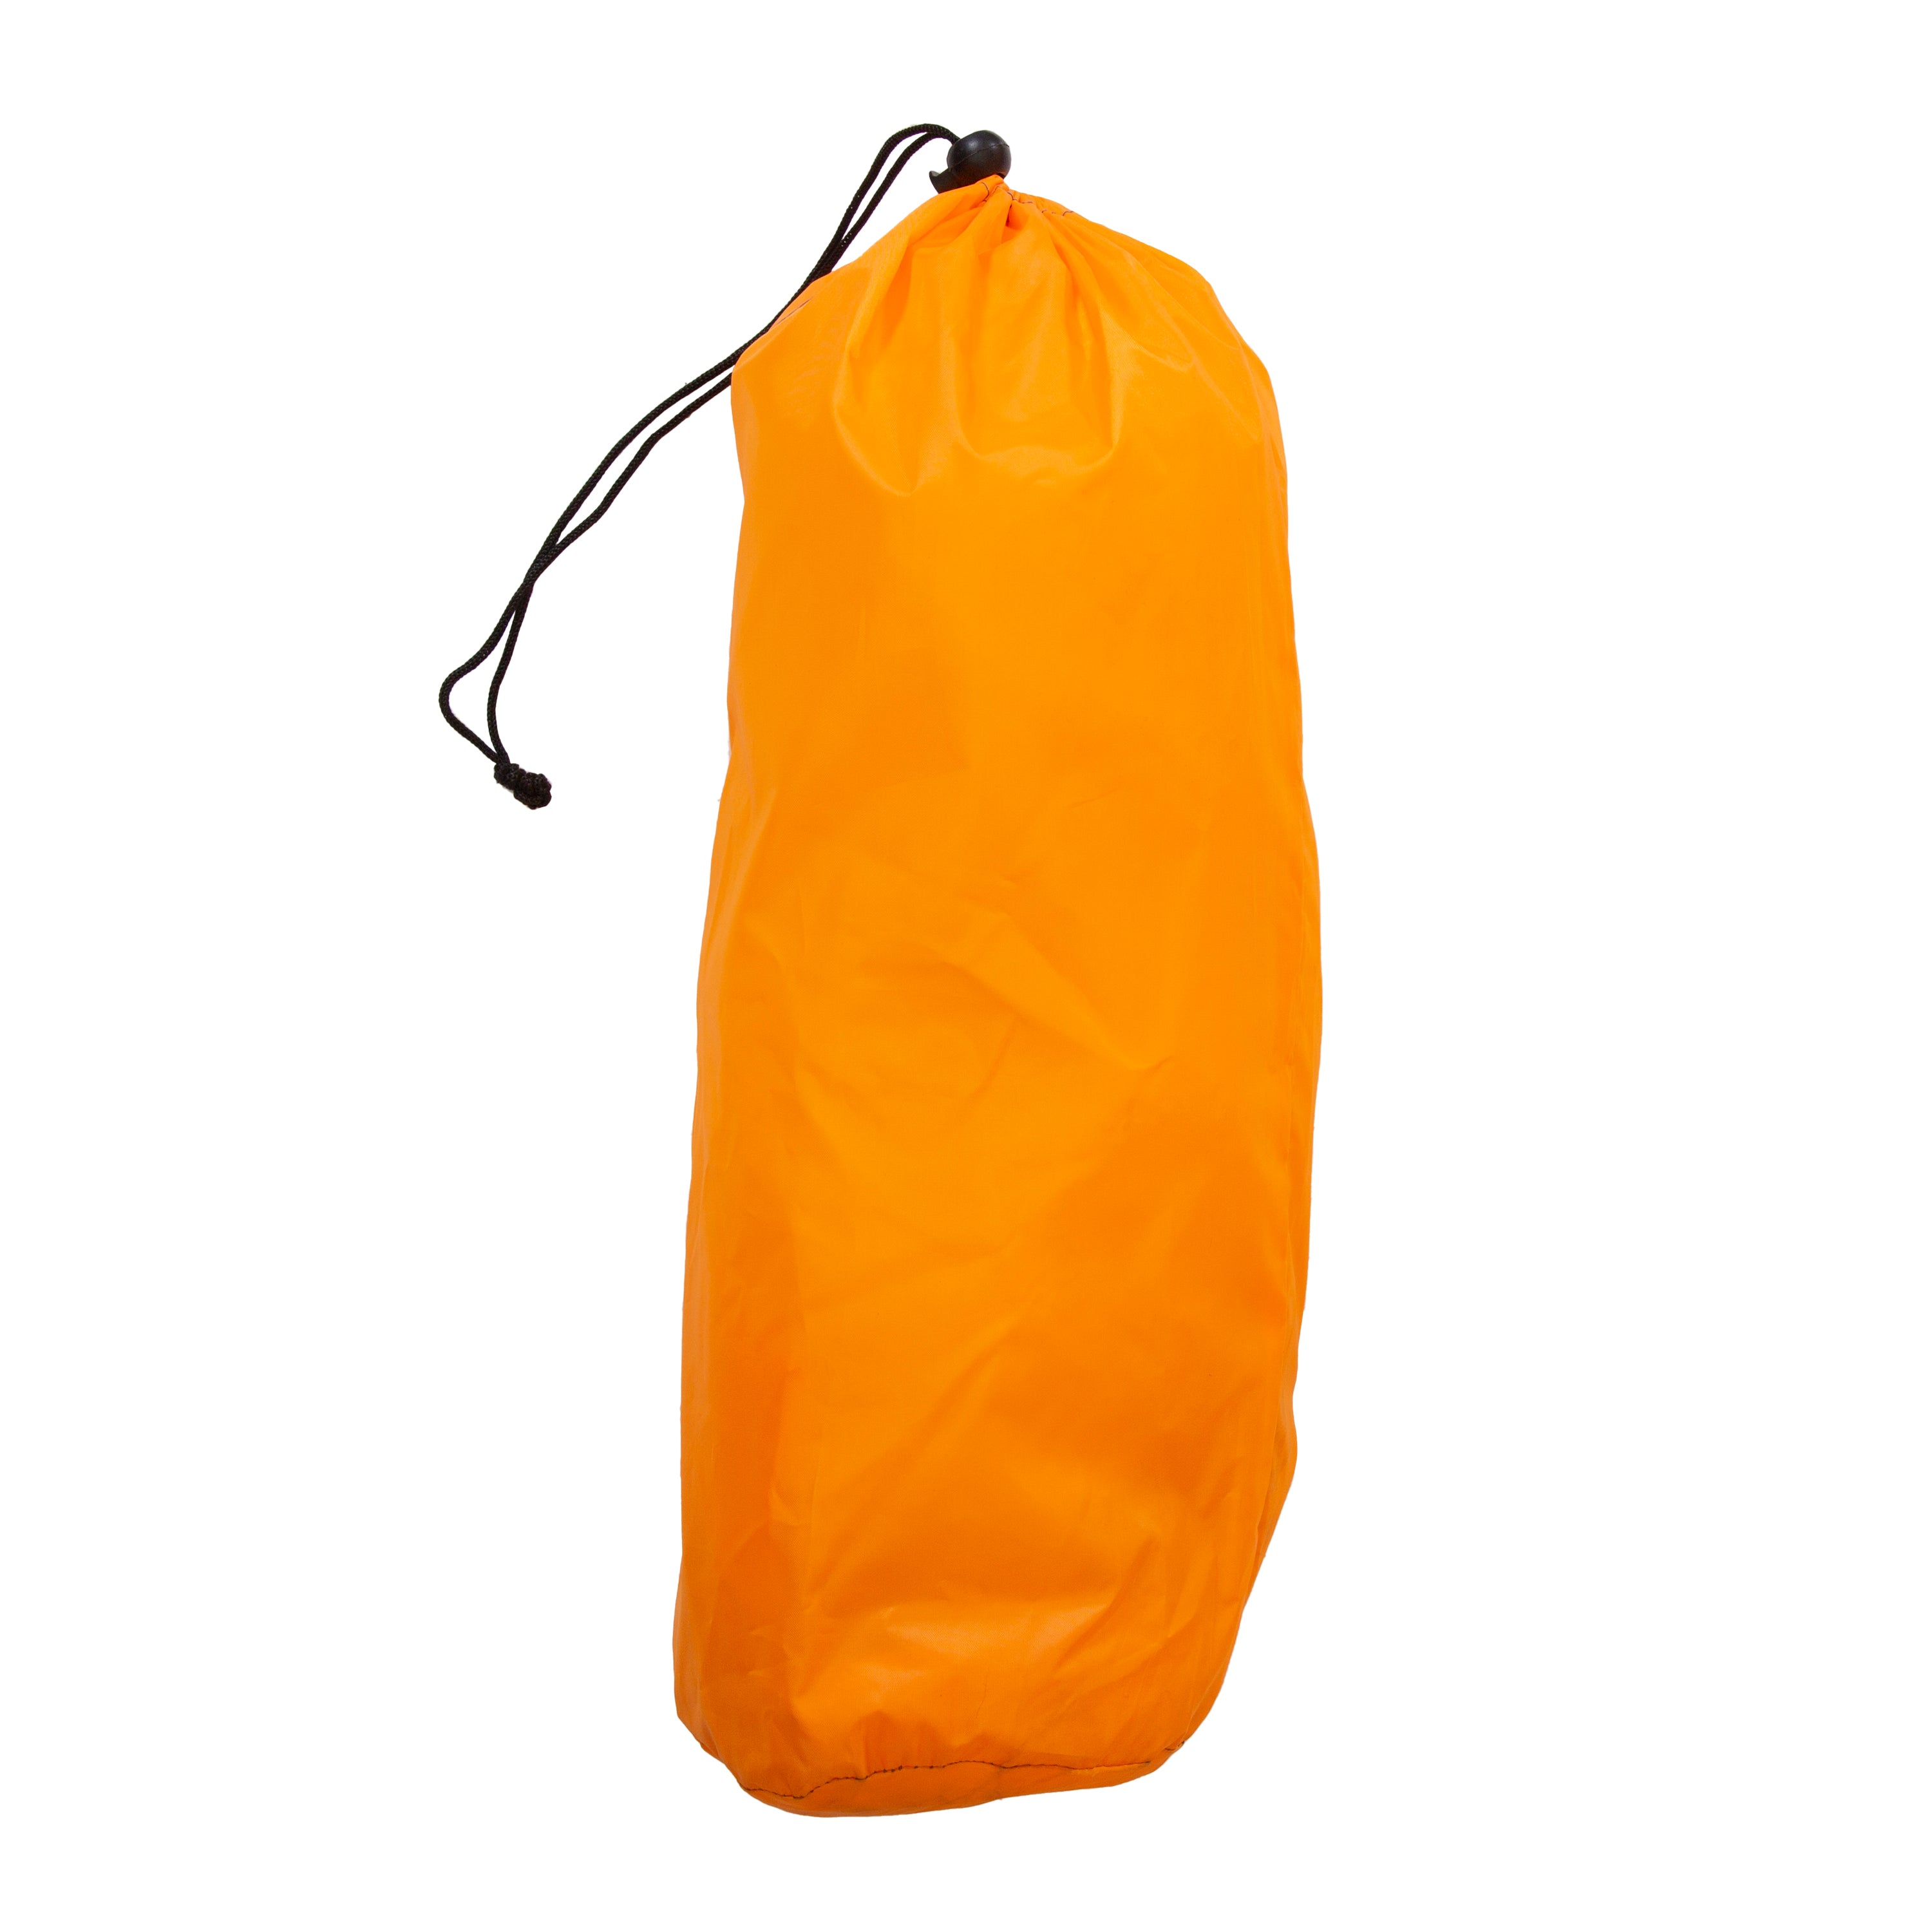 Scout 2 Person Tent - Orange